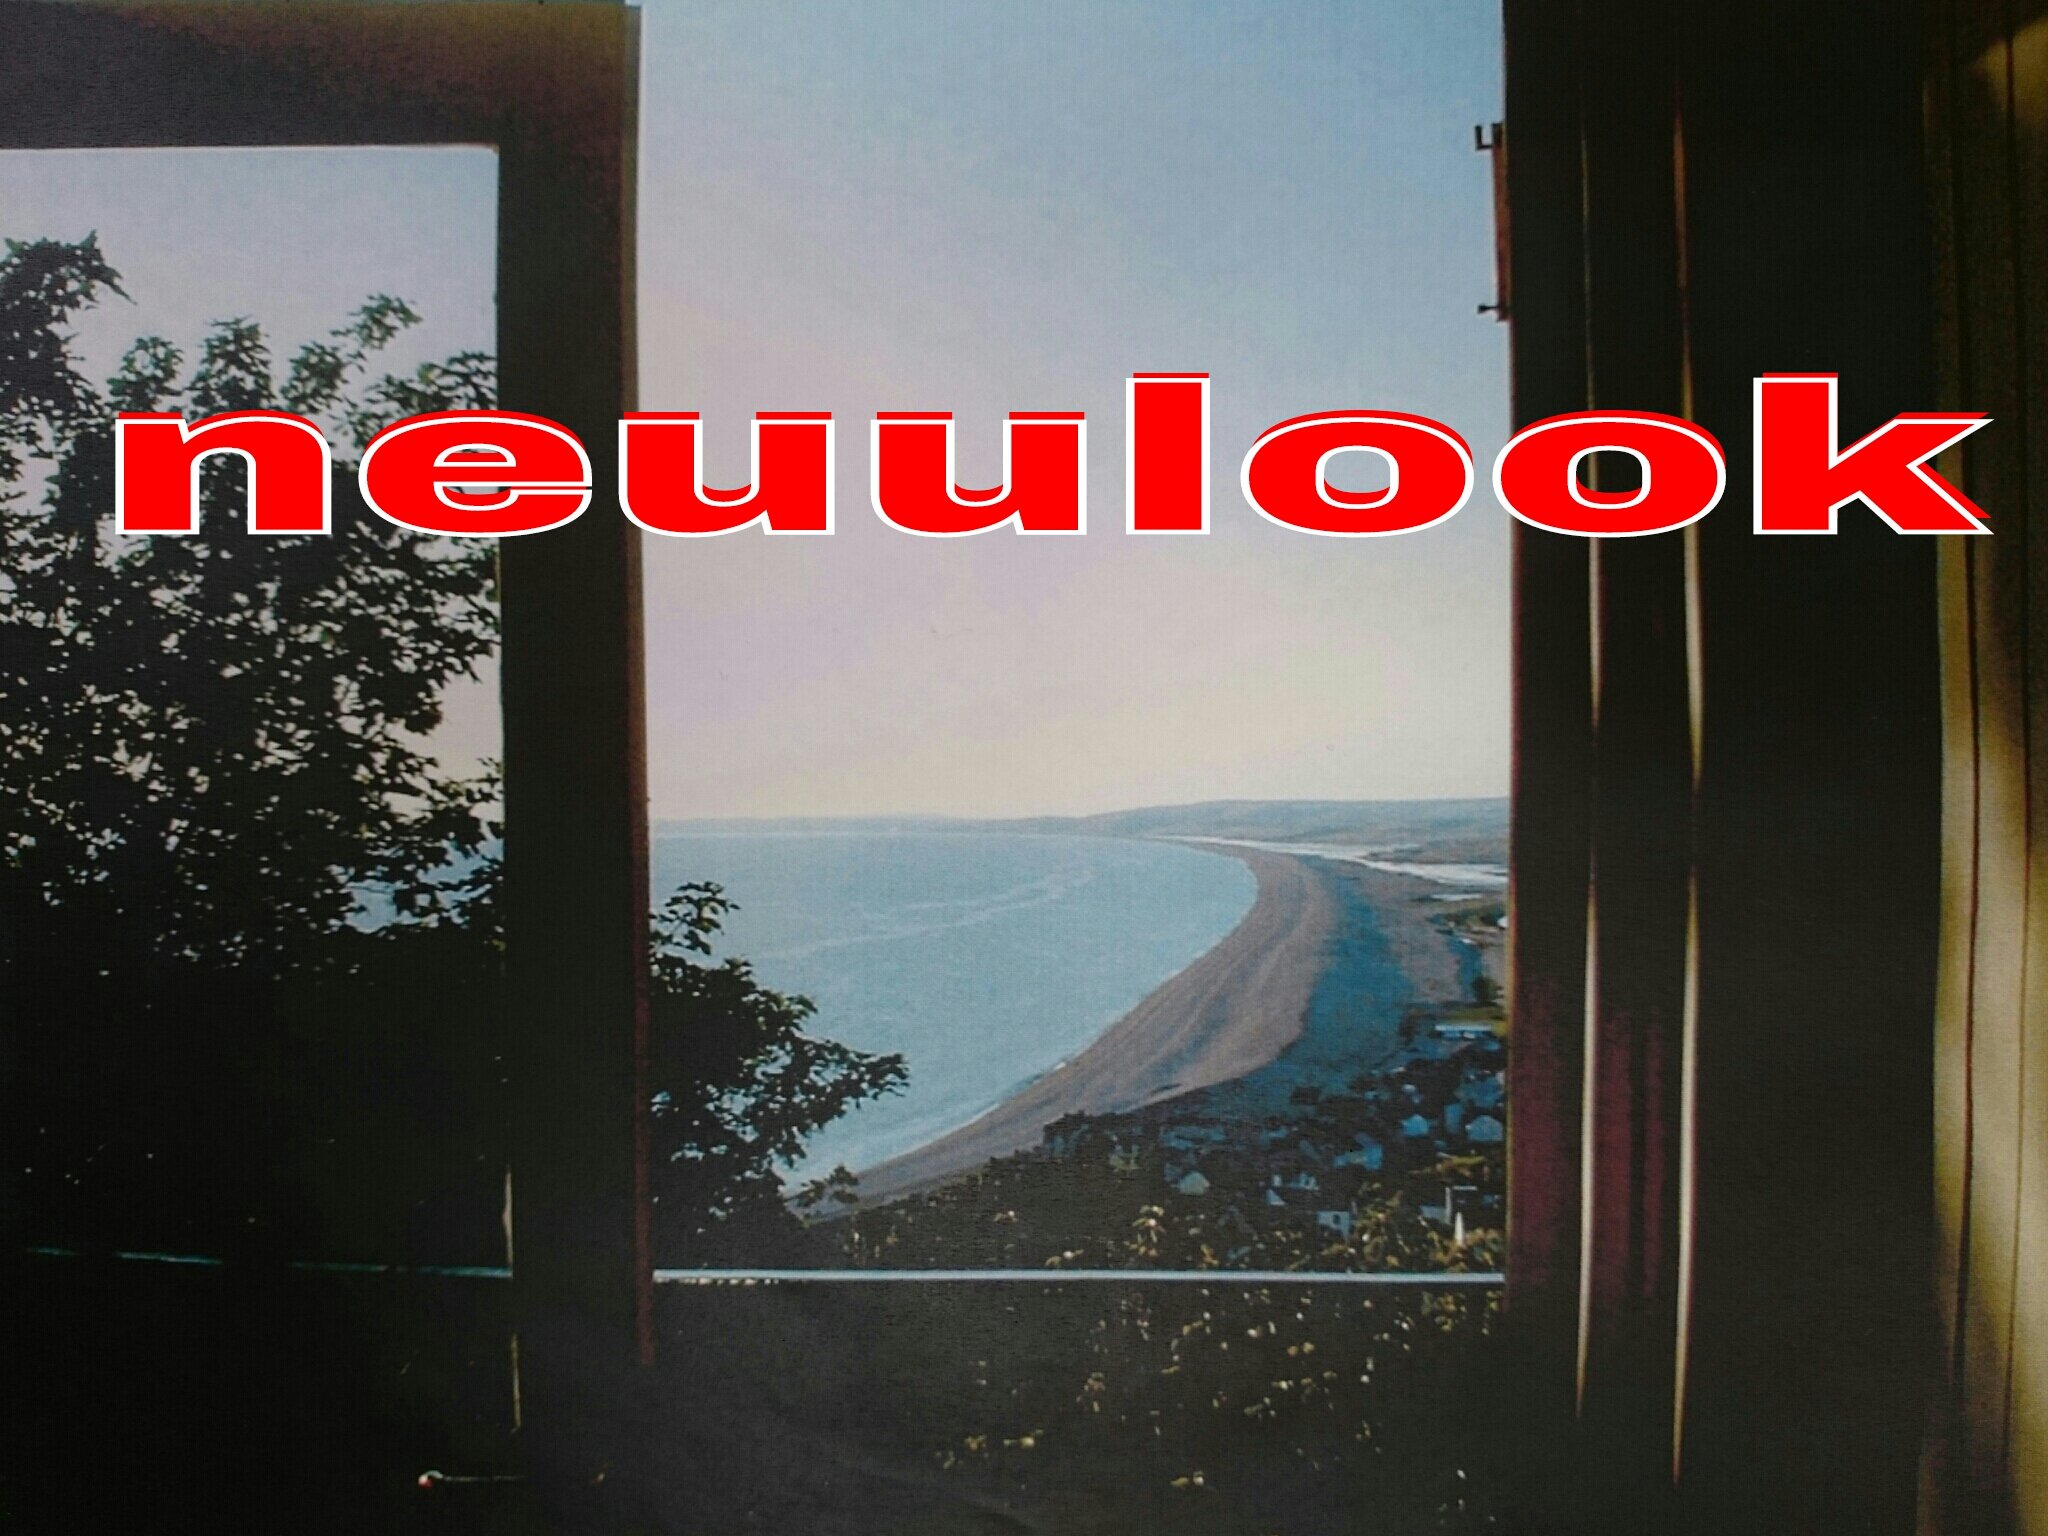 n - the studio of Neil Lillystone - neuulook - Neil Lillystone - arrow logo